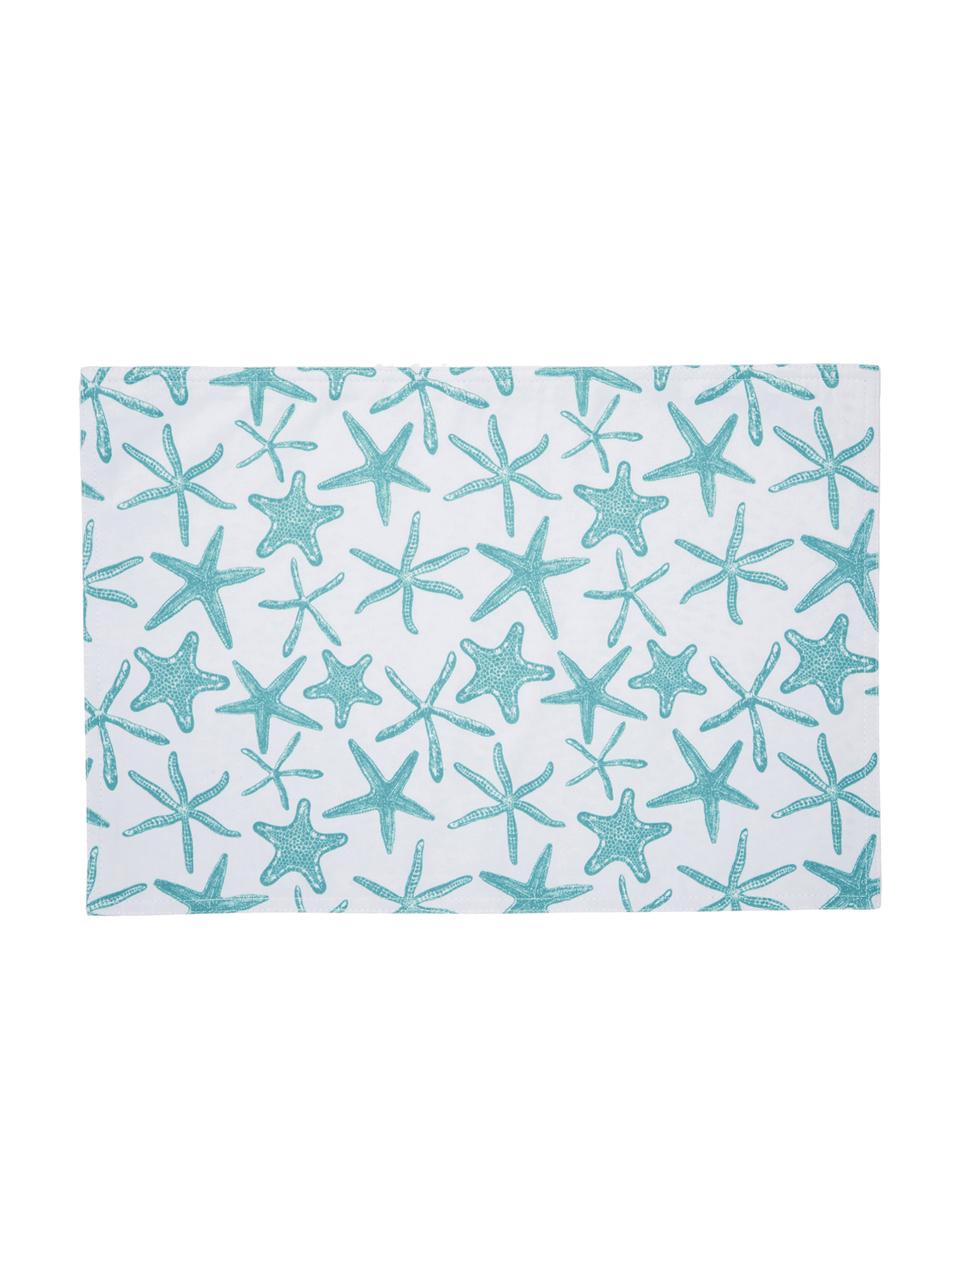 Waterafstotende placemats Starbone, 2 stuks, Polyester, Wit, blauw, 33 x 48 cm